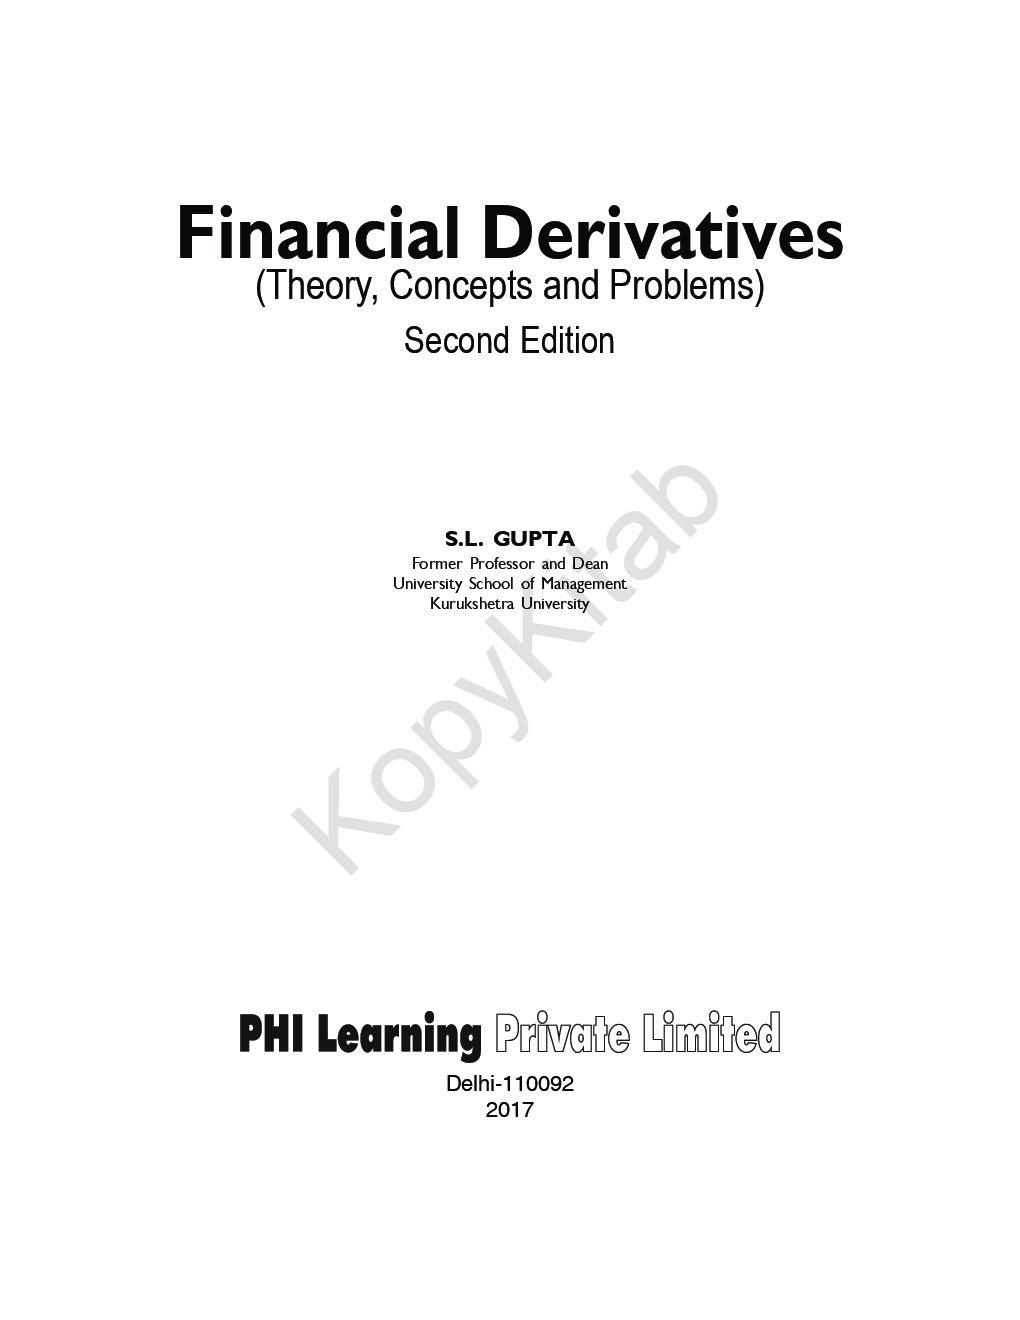 Financial derivatives by sl gupta pdf